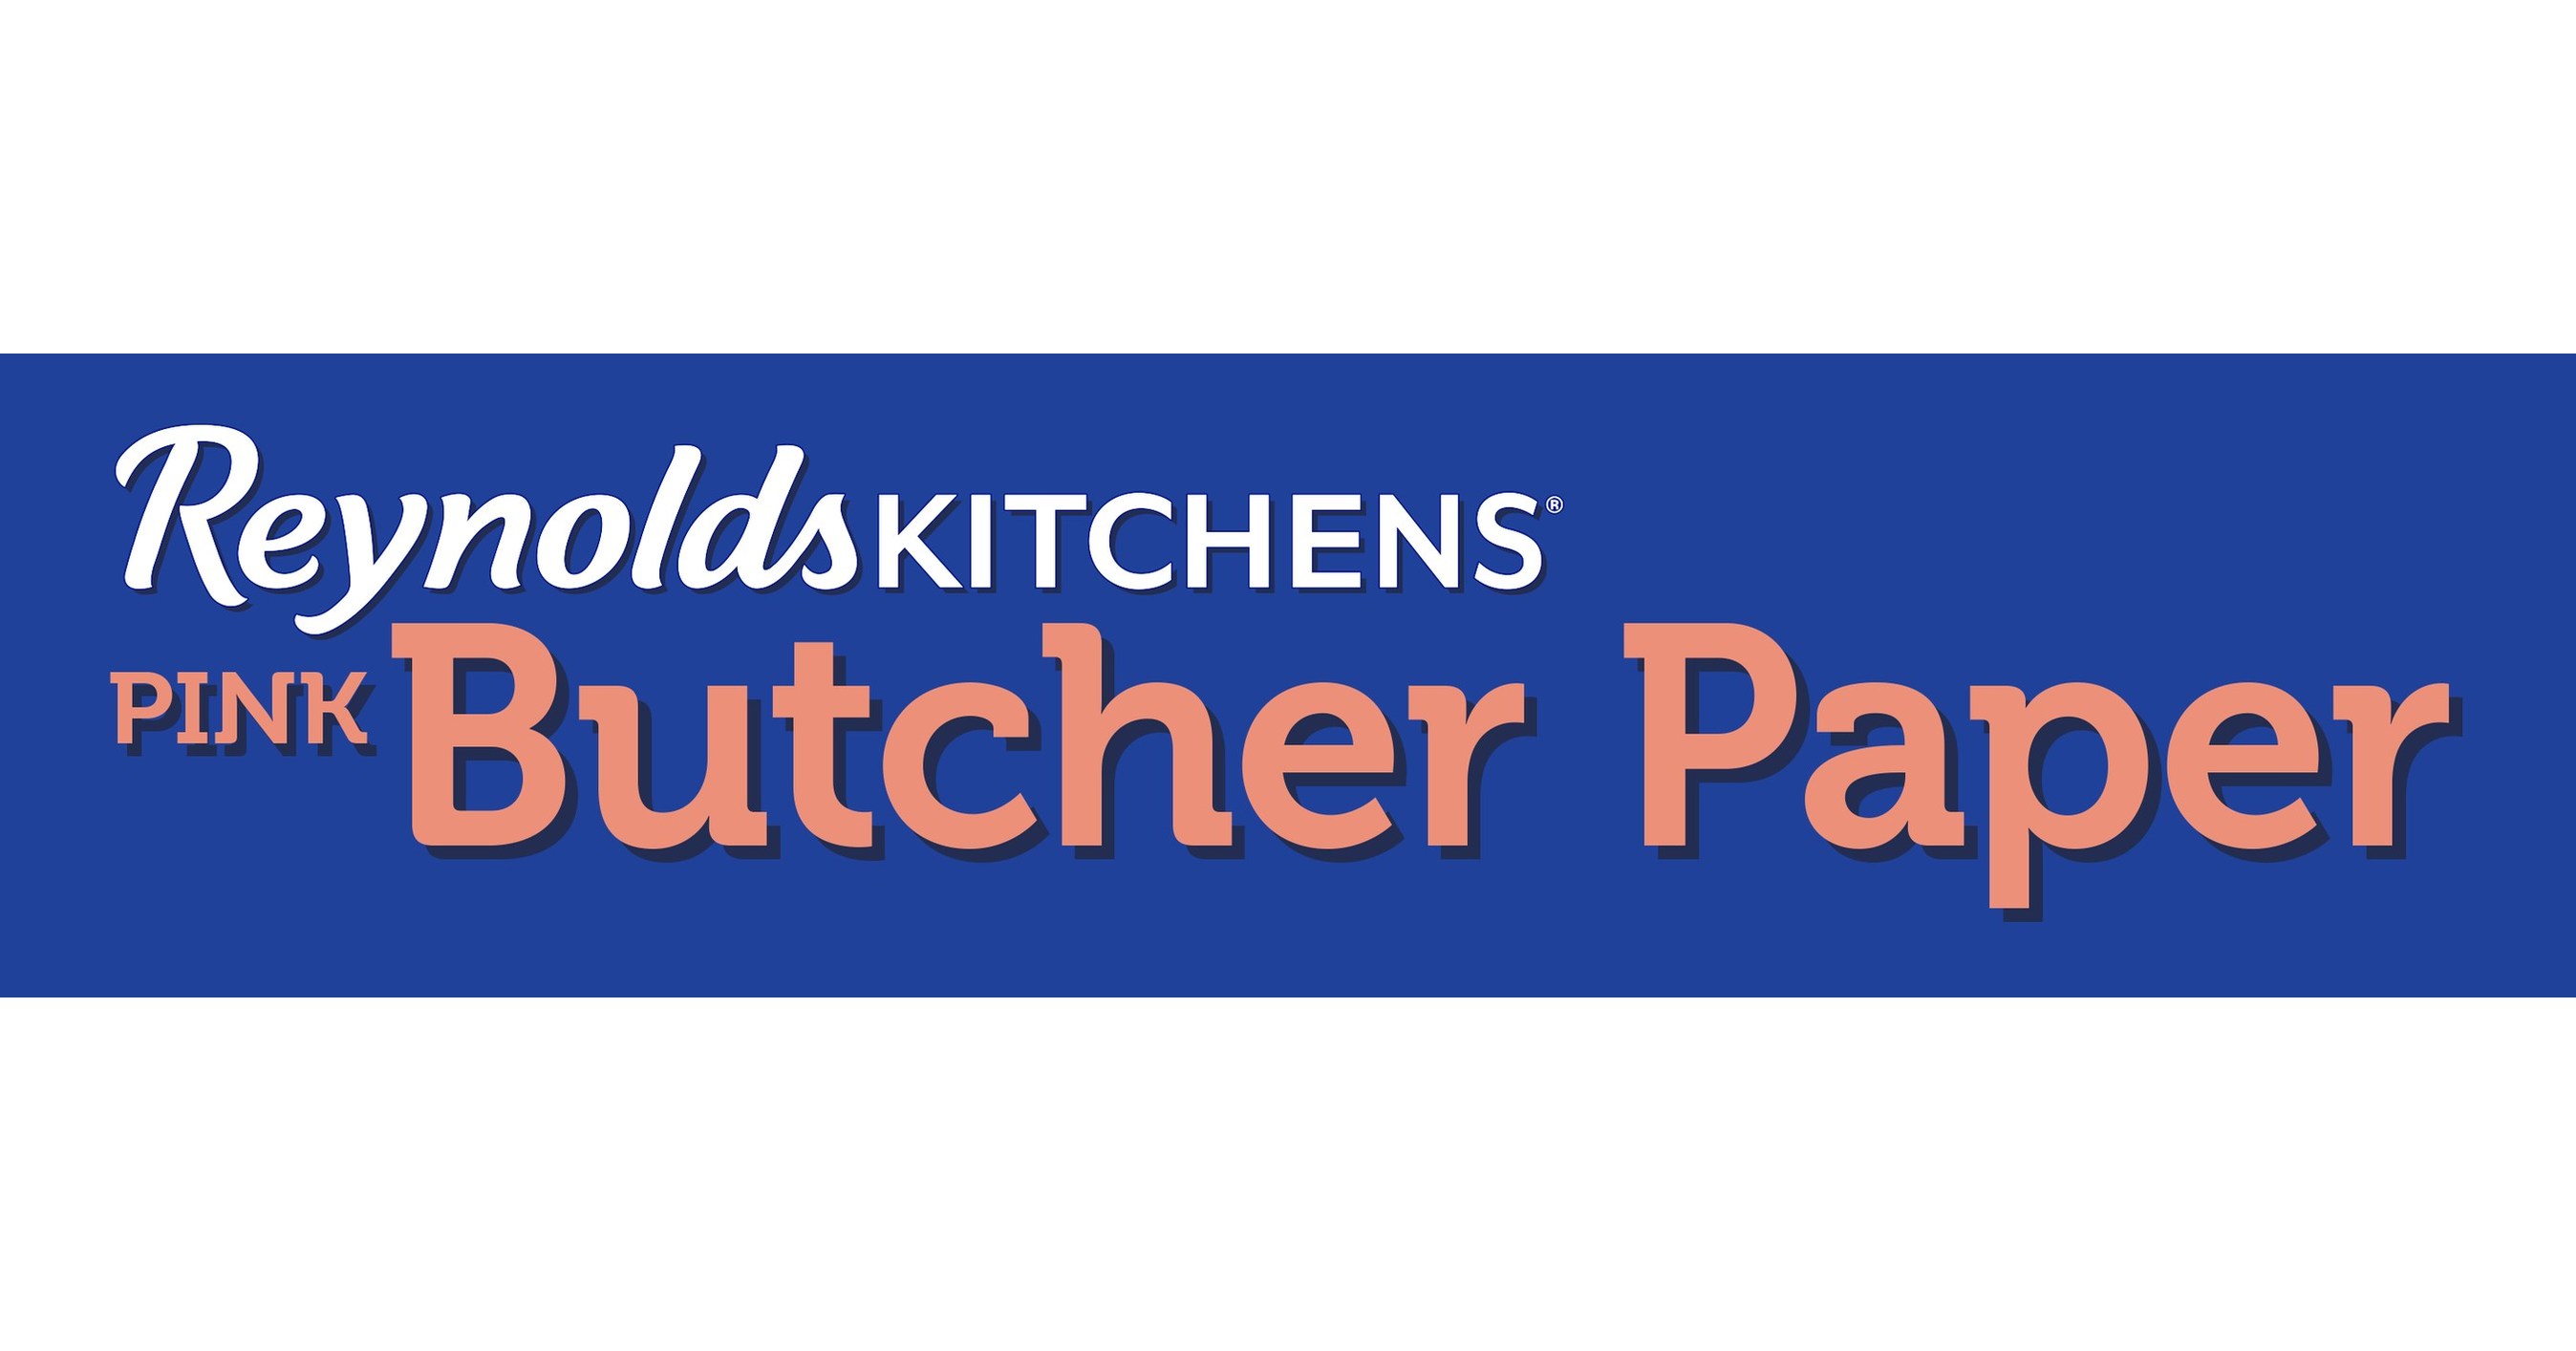 Try NEW Reynolds Kitchens Butcher Paper 